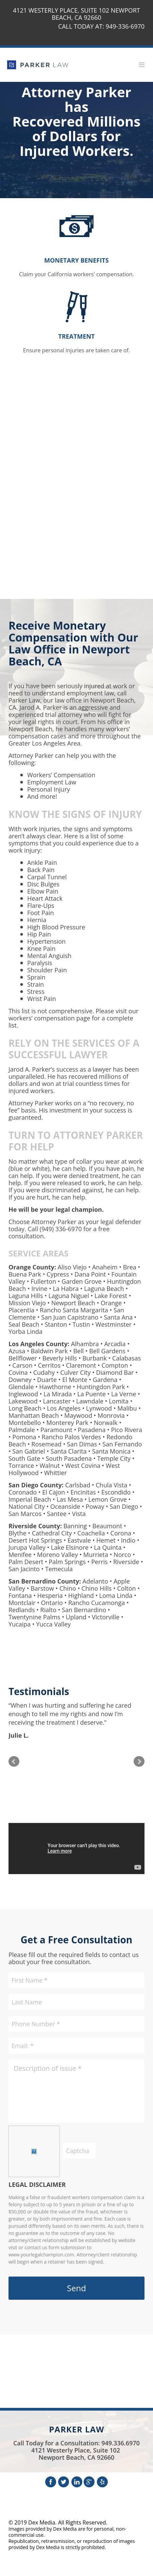 Parker Law - Newport Beach CA Lawyers